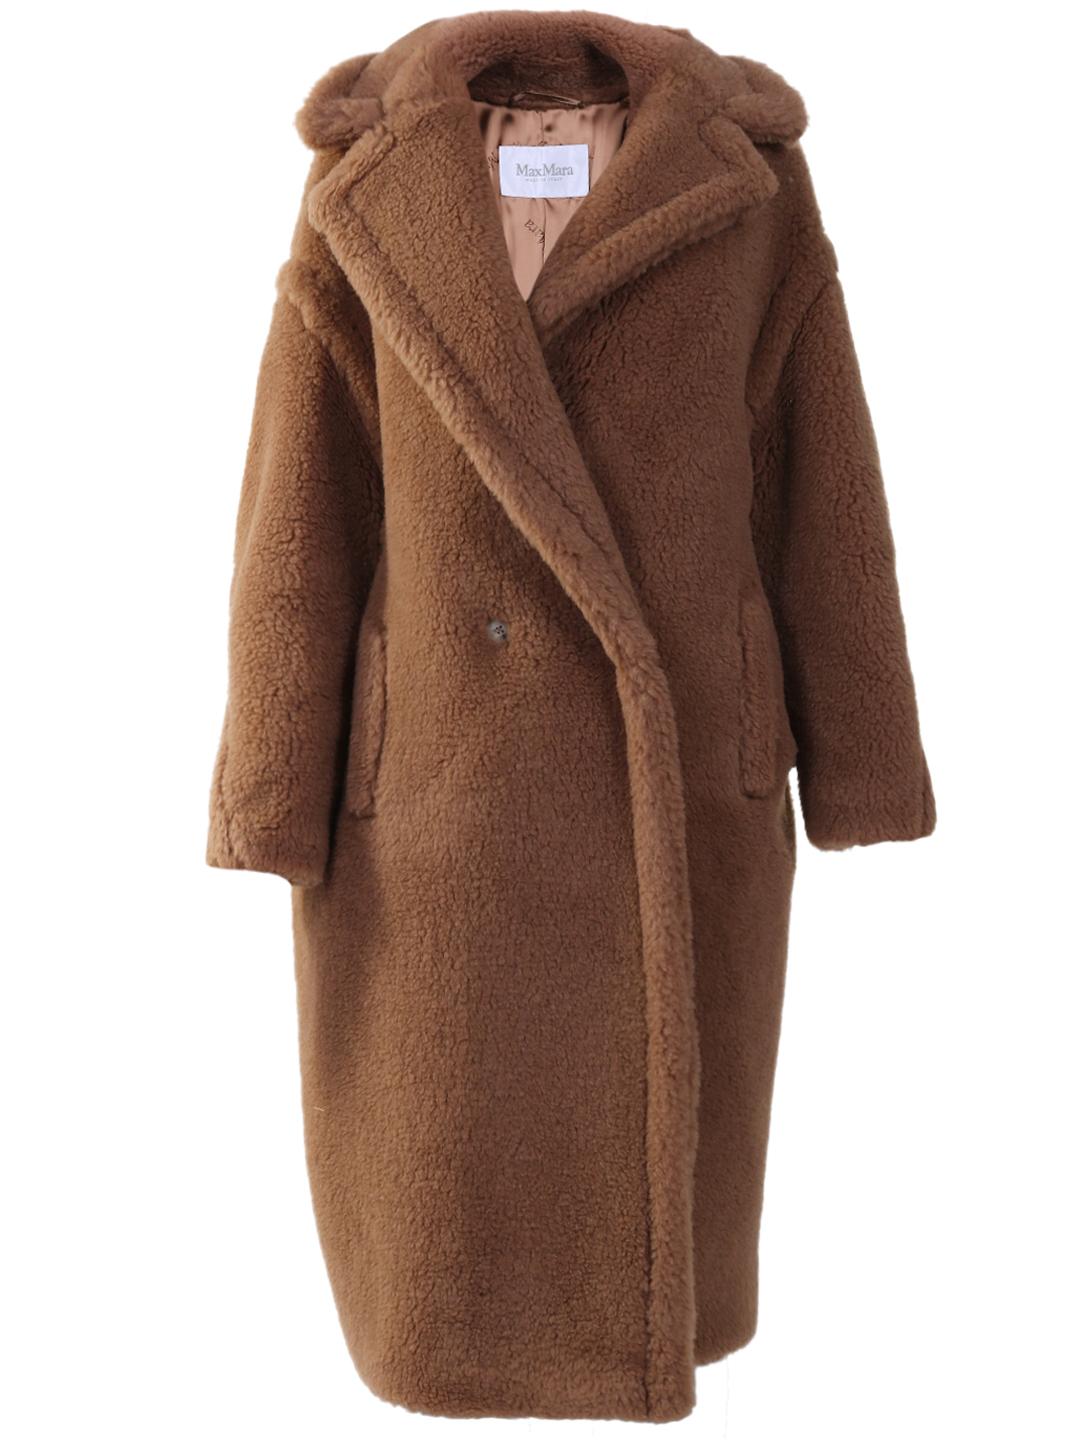 Max Mara Silk Teddy Bear Icon Coat in Camel (Natural) | Lyst